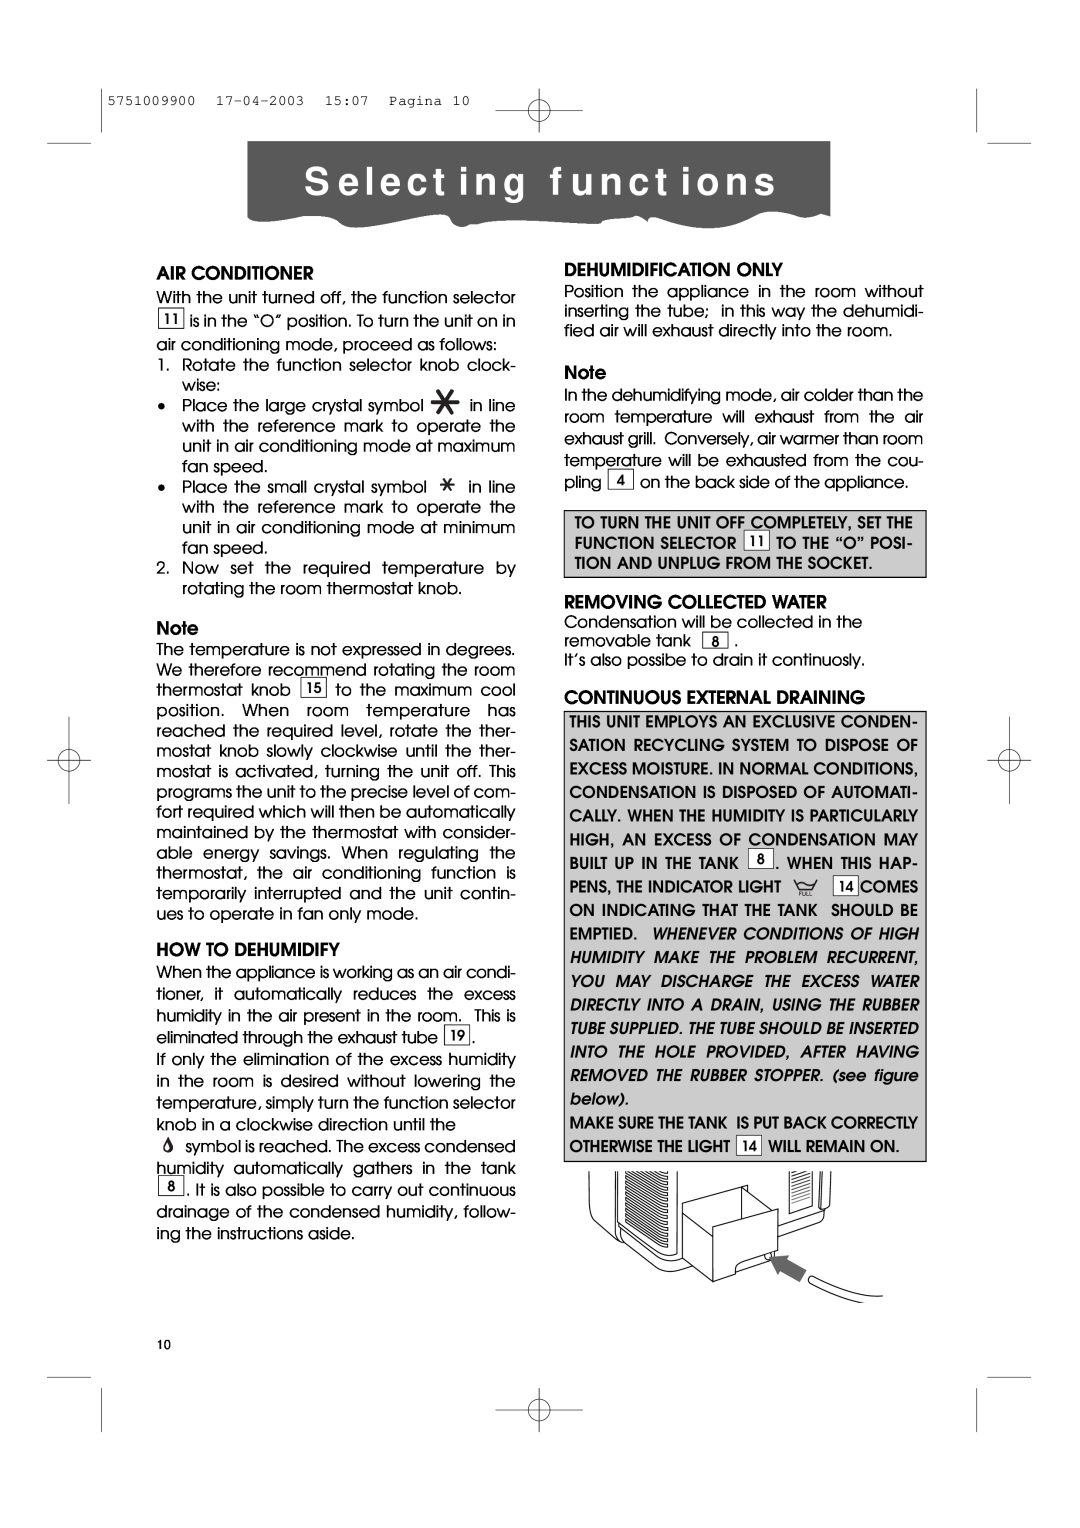 DeLonghi Pac 1000 manual S e l e c t i n g f u n c t i o n s, Air Conditioner, How To Dehumidify, Dehumidification Only 